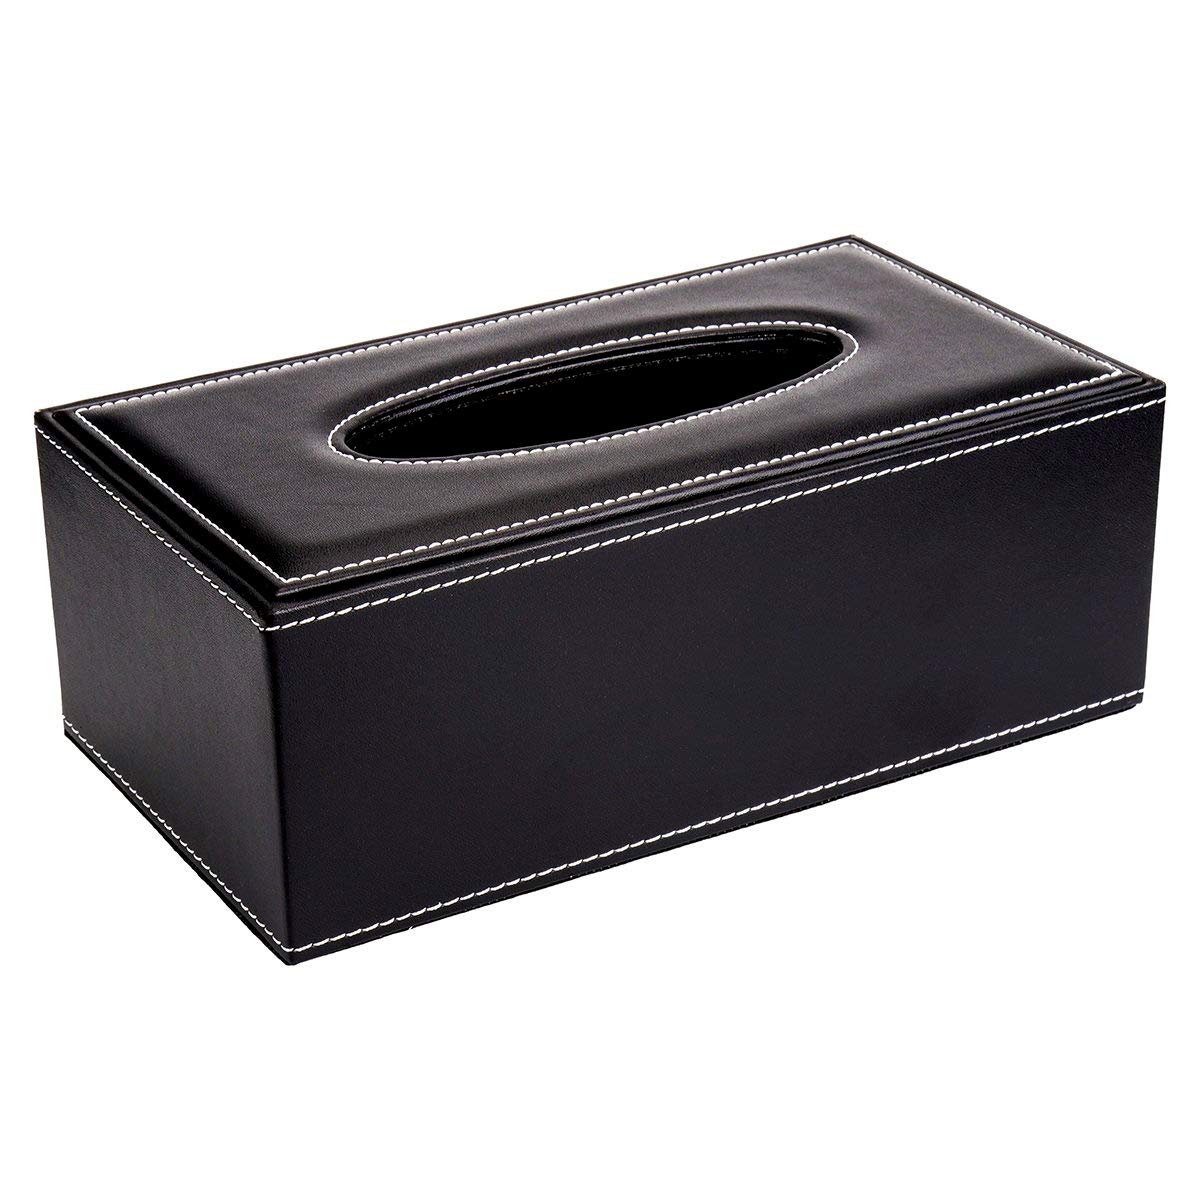 Download CROWNSTARQI Modern PU Leather Tissue Box Kleenex Cover Rectangle Black